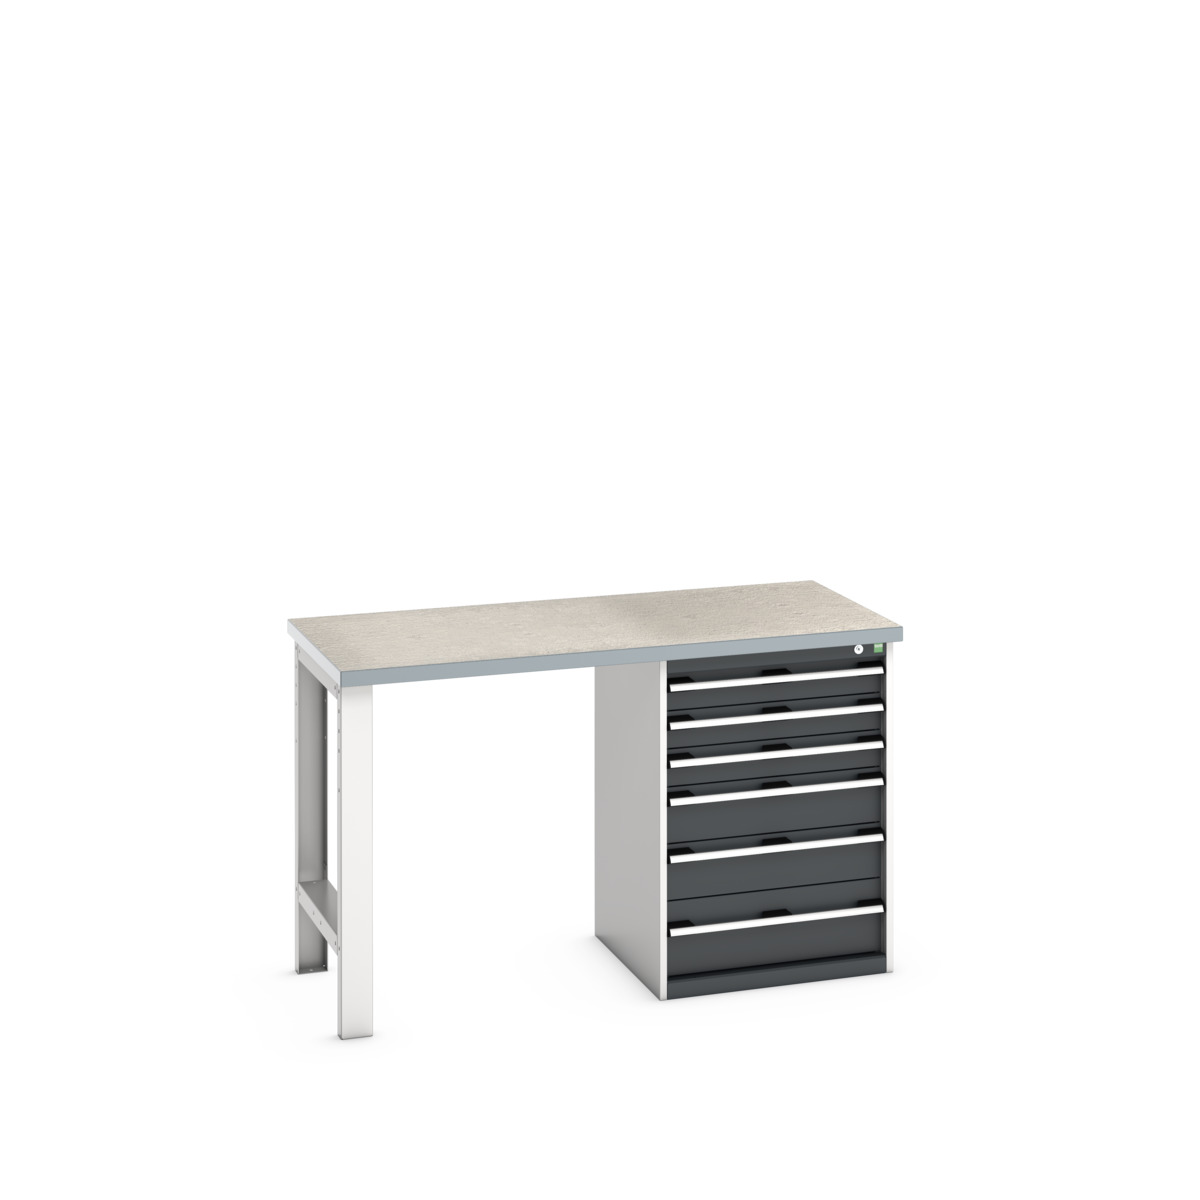 41003493. - cubio pedestal bench (lino)